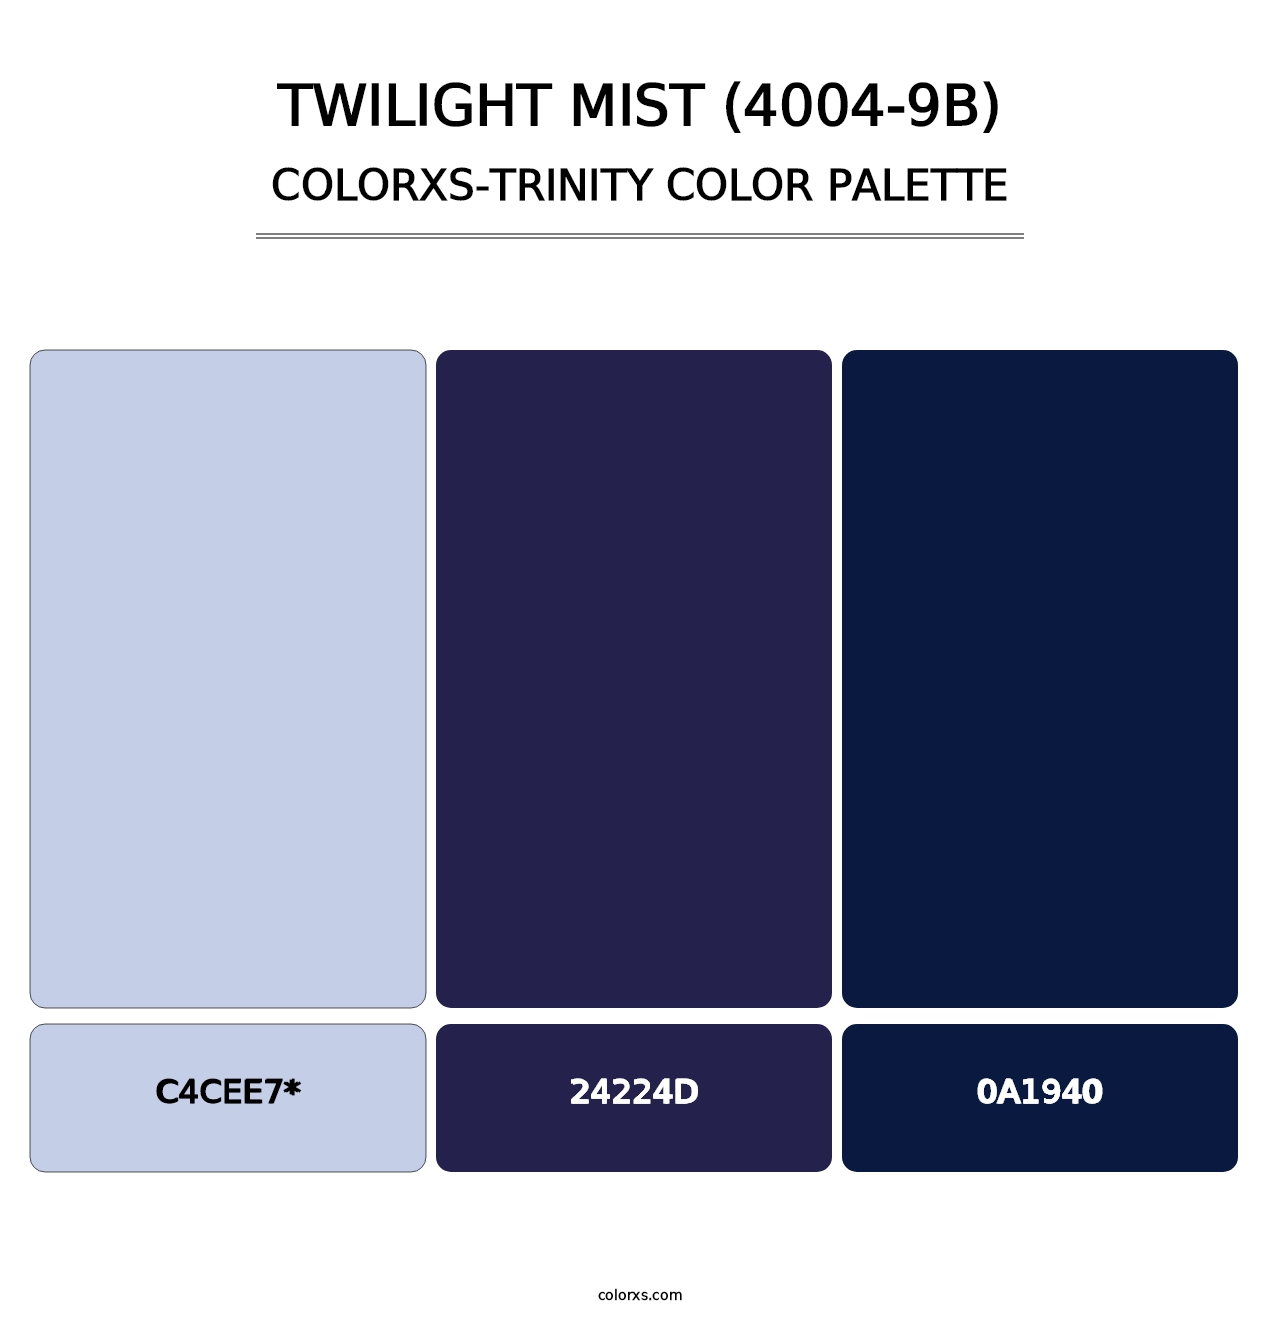 Twilight Mist (4004-9B) - Colorxs Trinity Palette